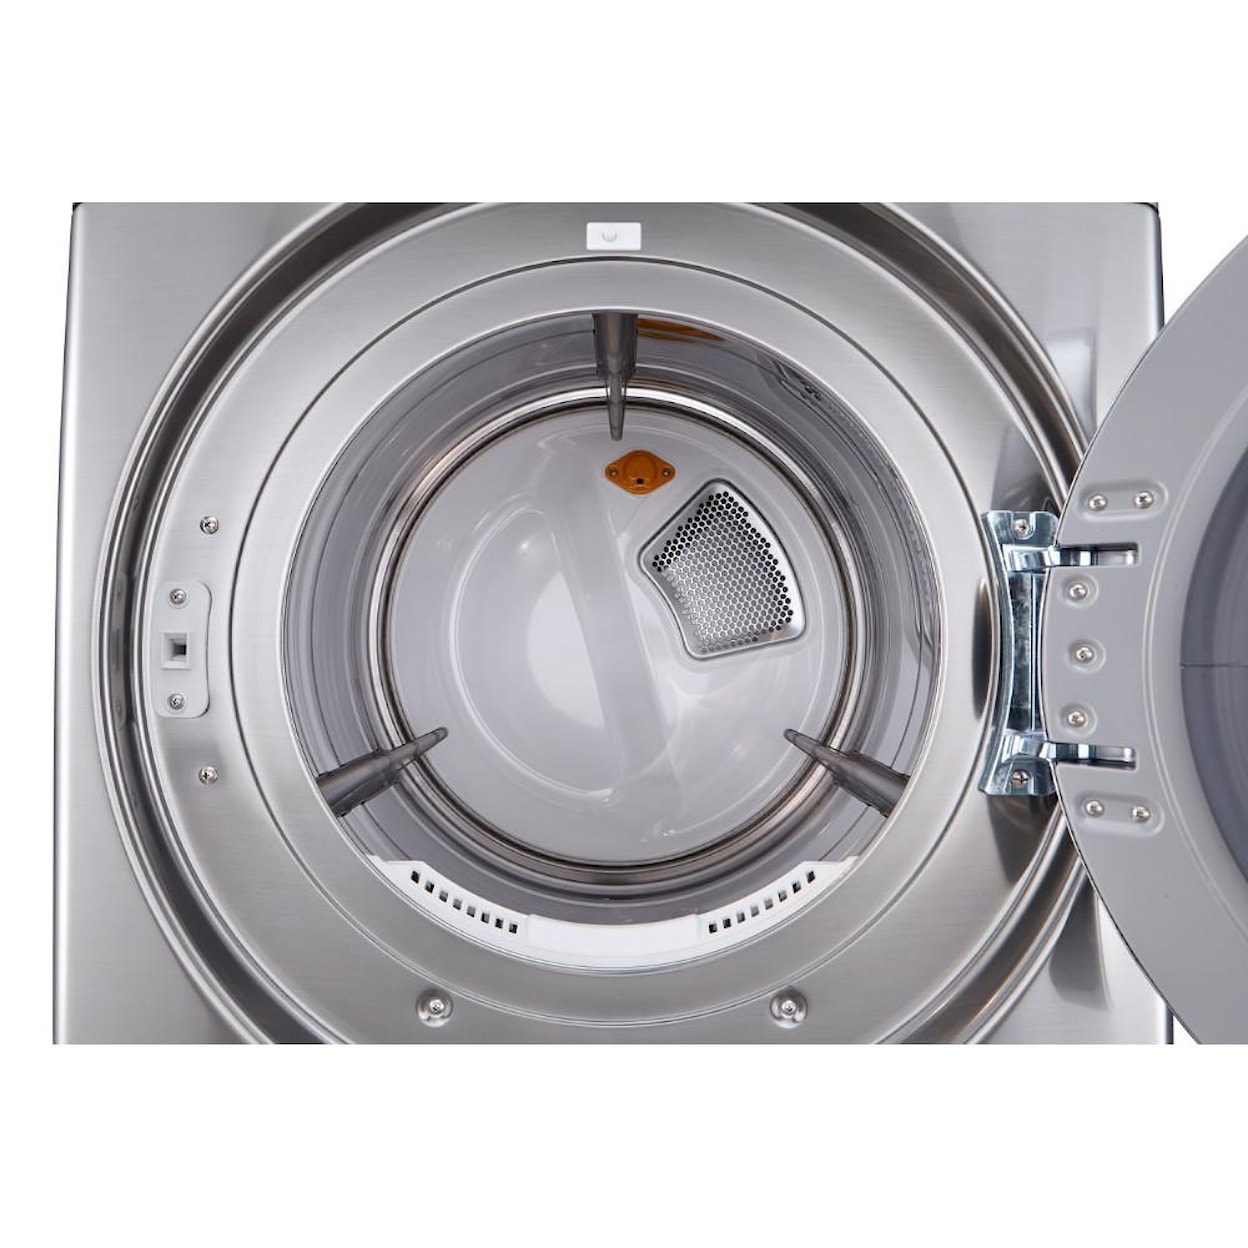 LG Appliances Dryers 7.4 Cu. Ft. Front Load Gas Steam Dryer